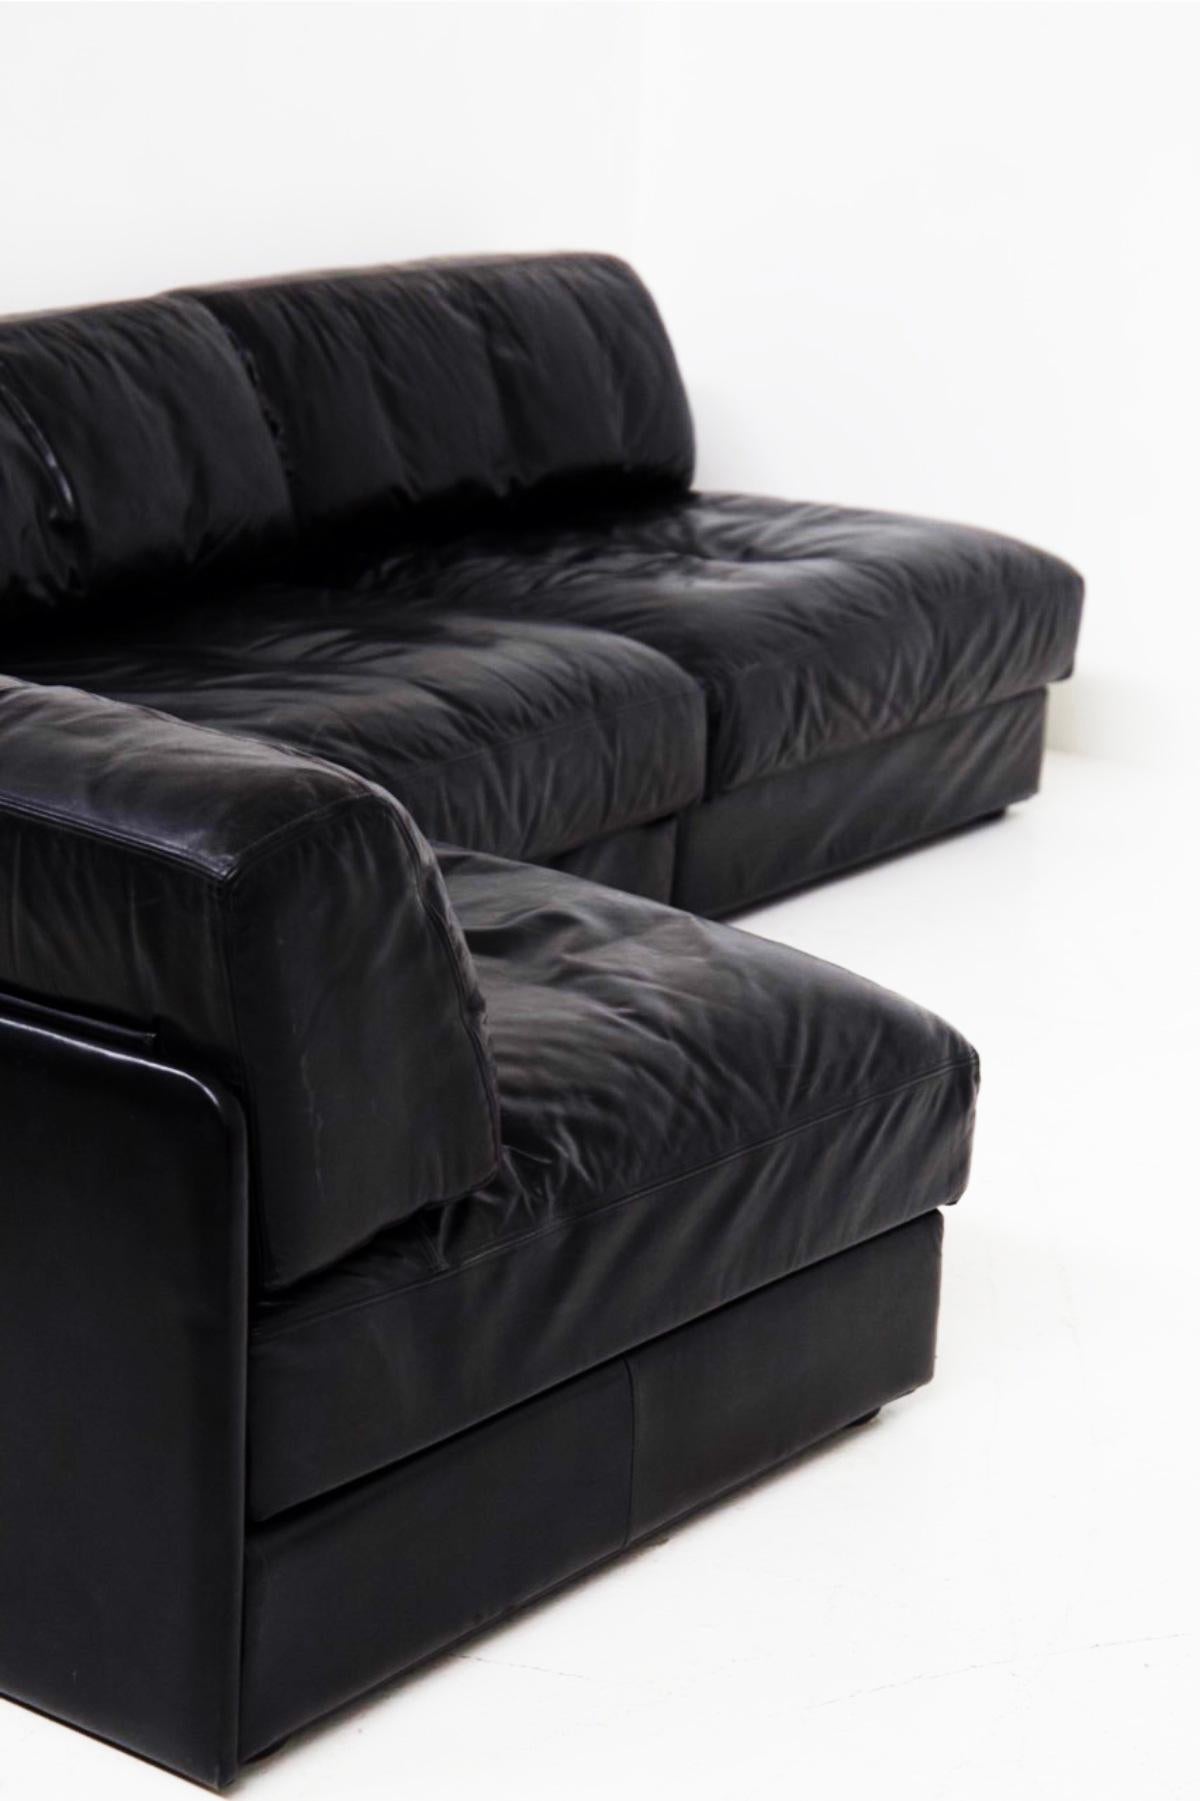 Vintage Black Leather Sofa Ds76 Sofart 6